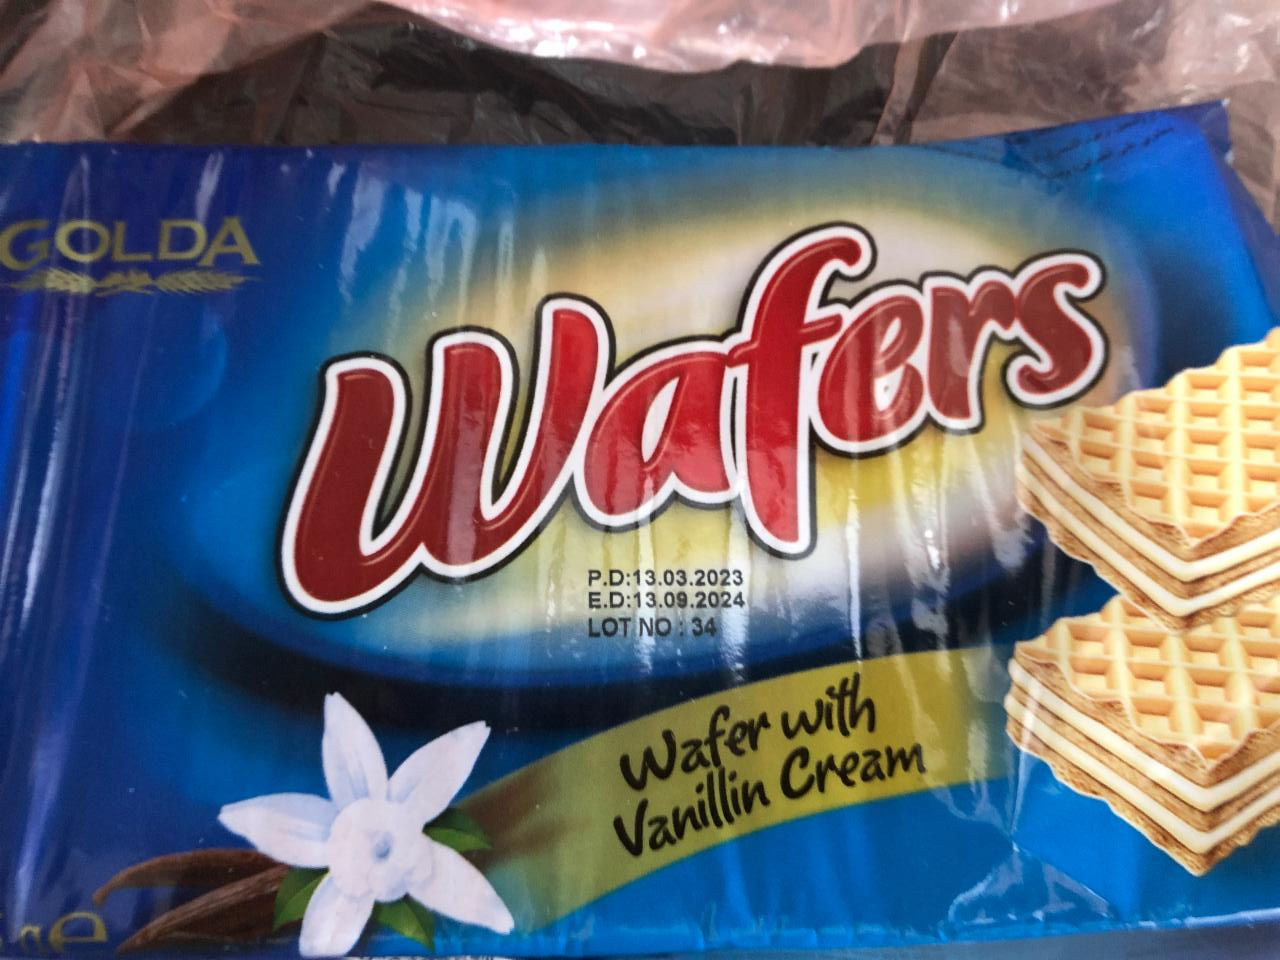 Fotografie - Wafers wafer with vanillin cream Golda